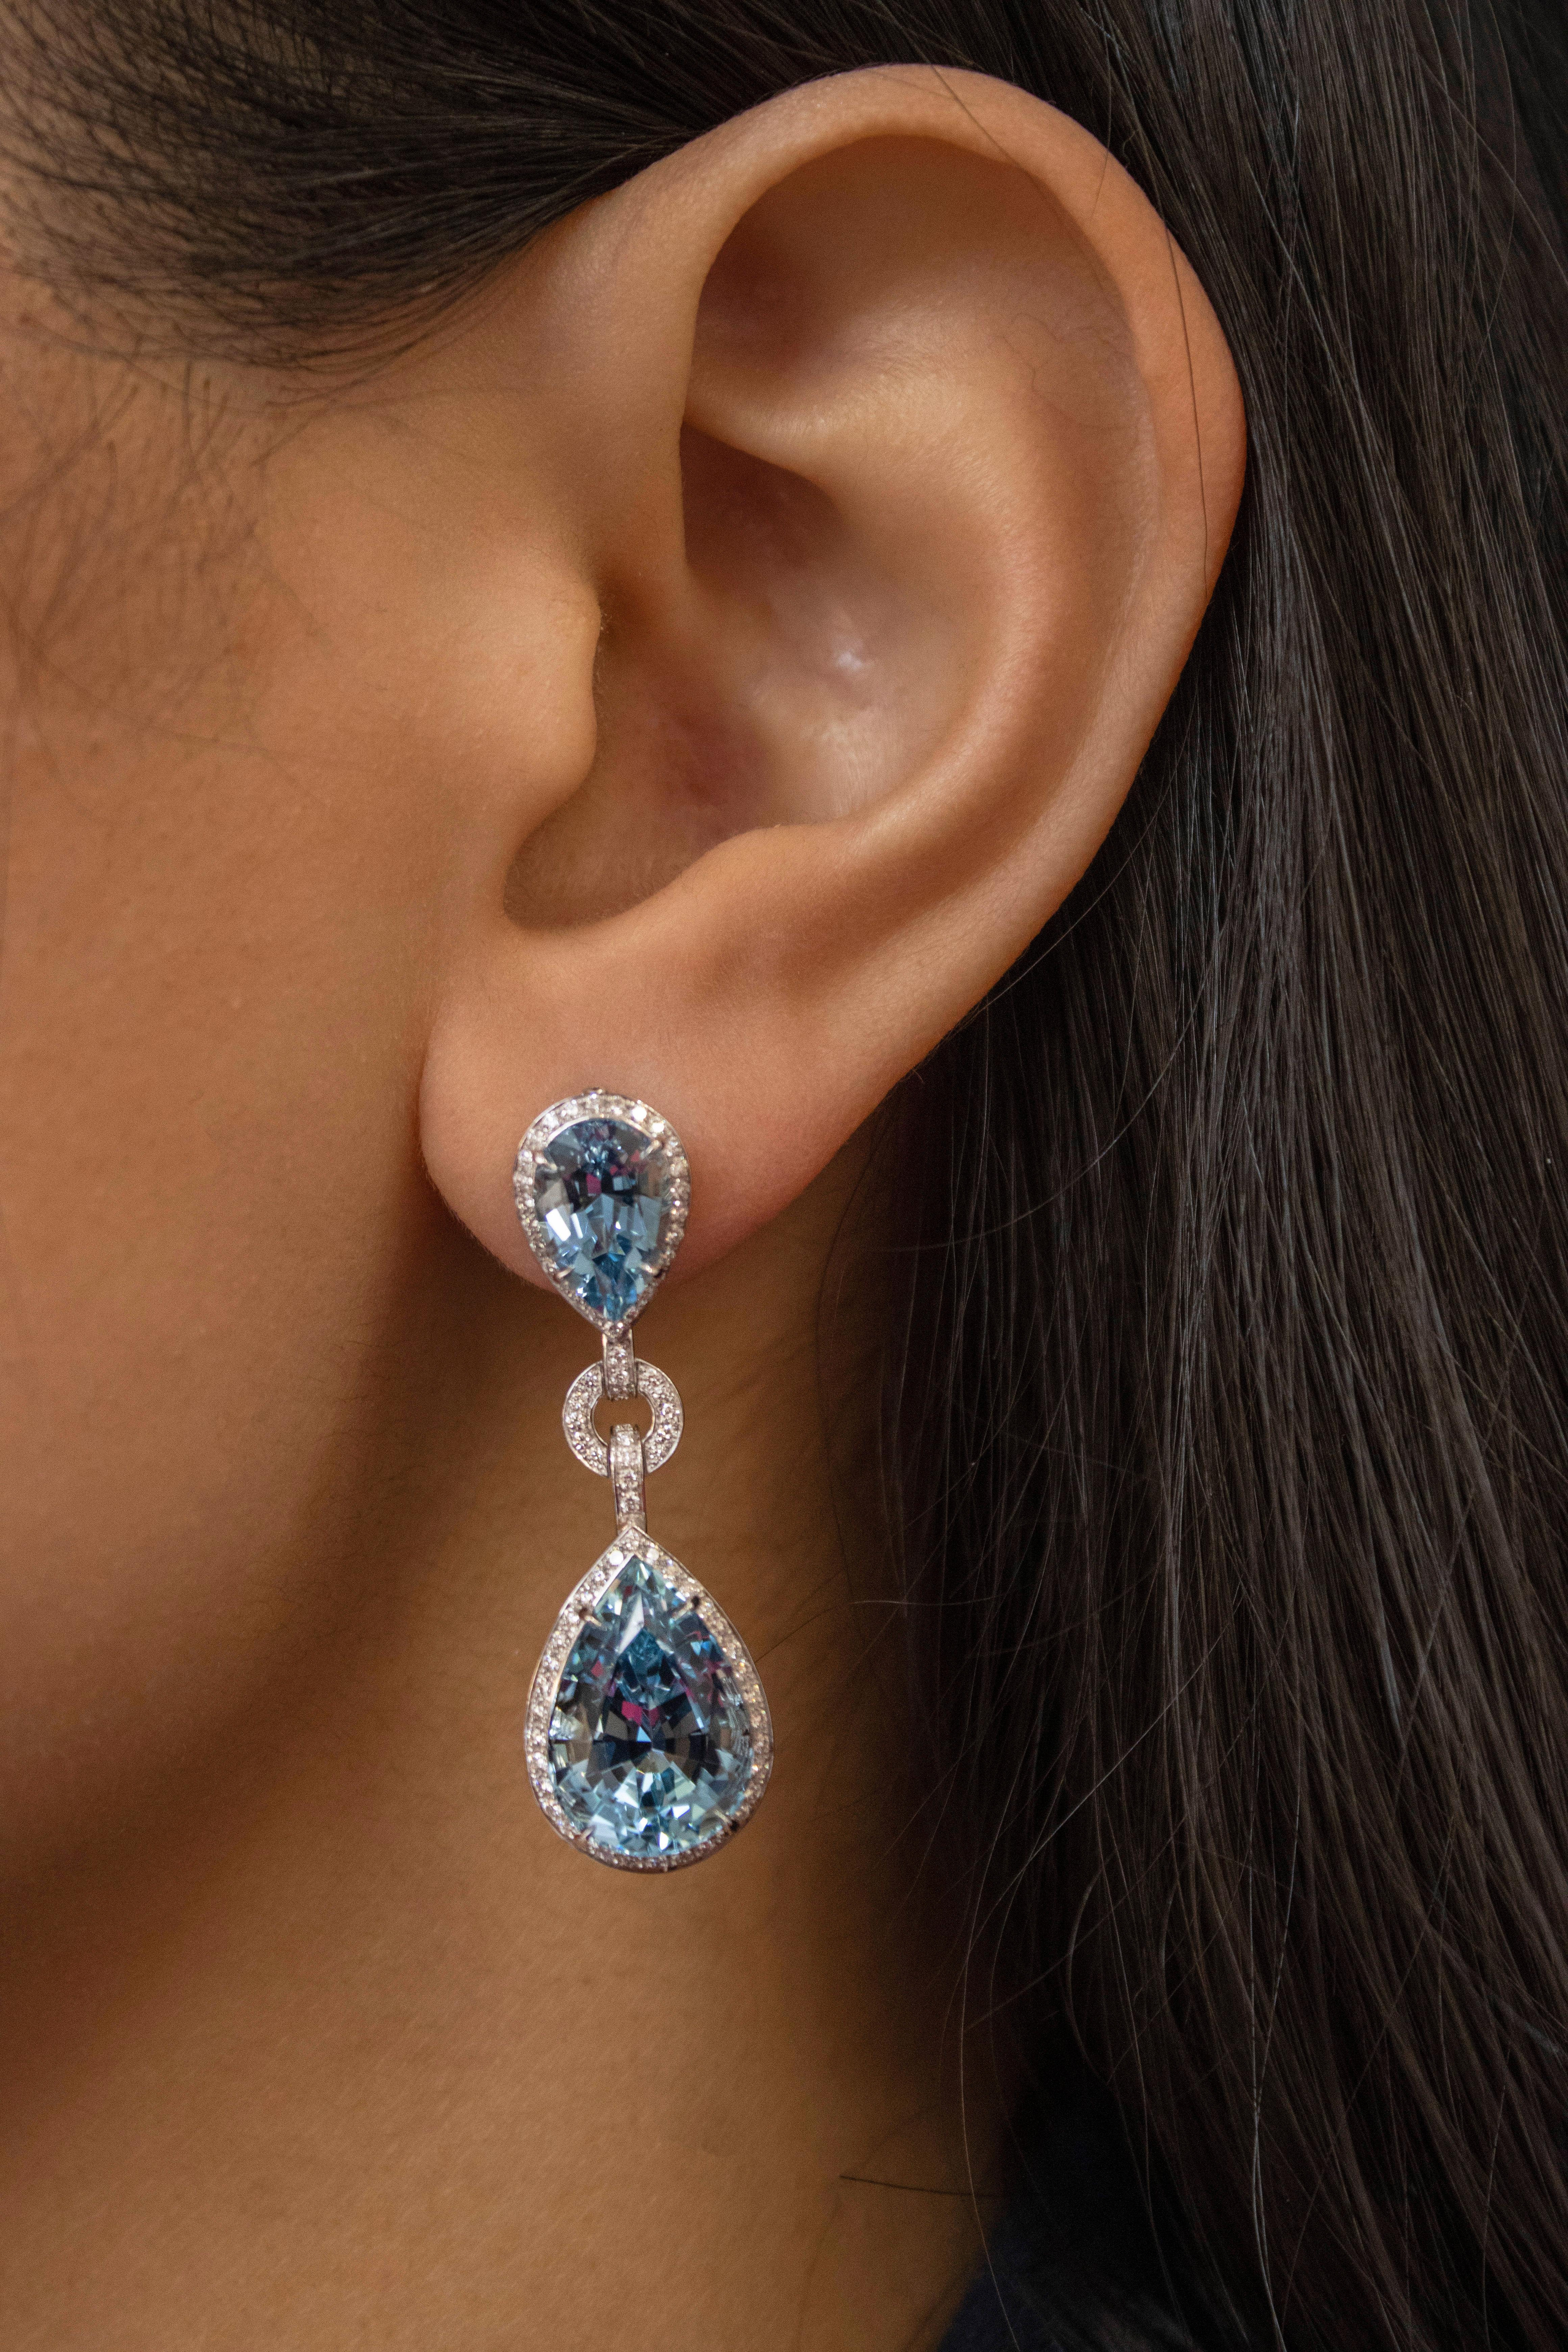 Contemporary Roman Malakov 15.69 Carat Pear Shape Aquamarine and Diamond Halo Dangle Earrings For Sale